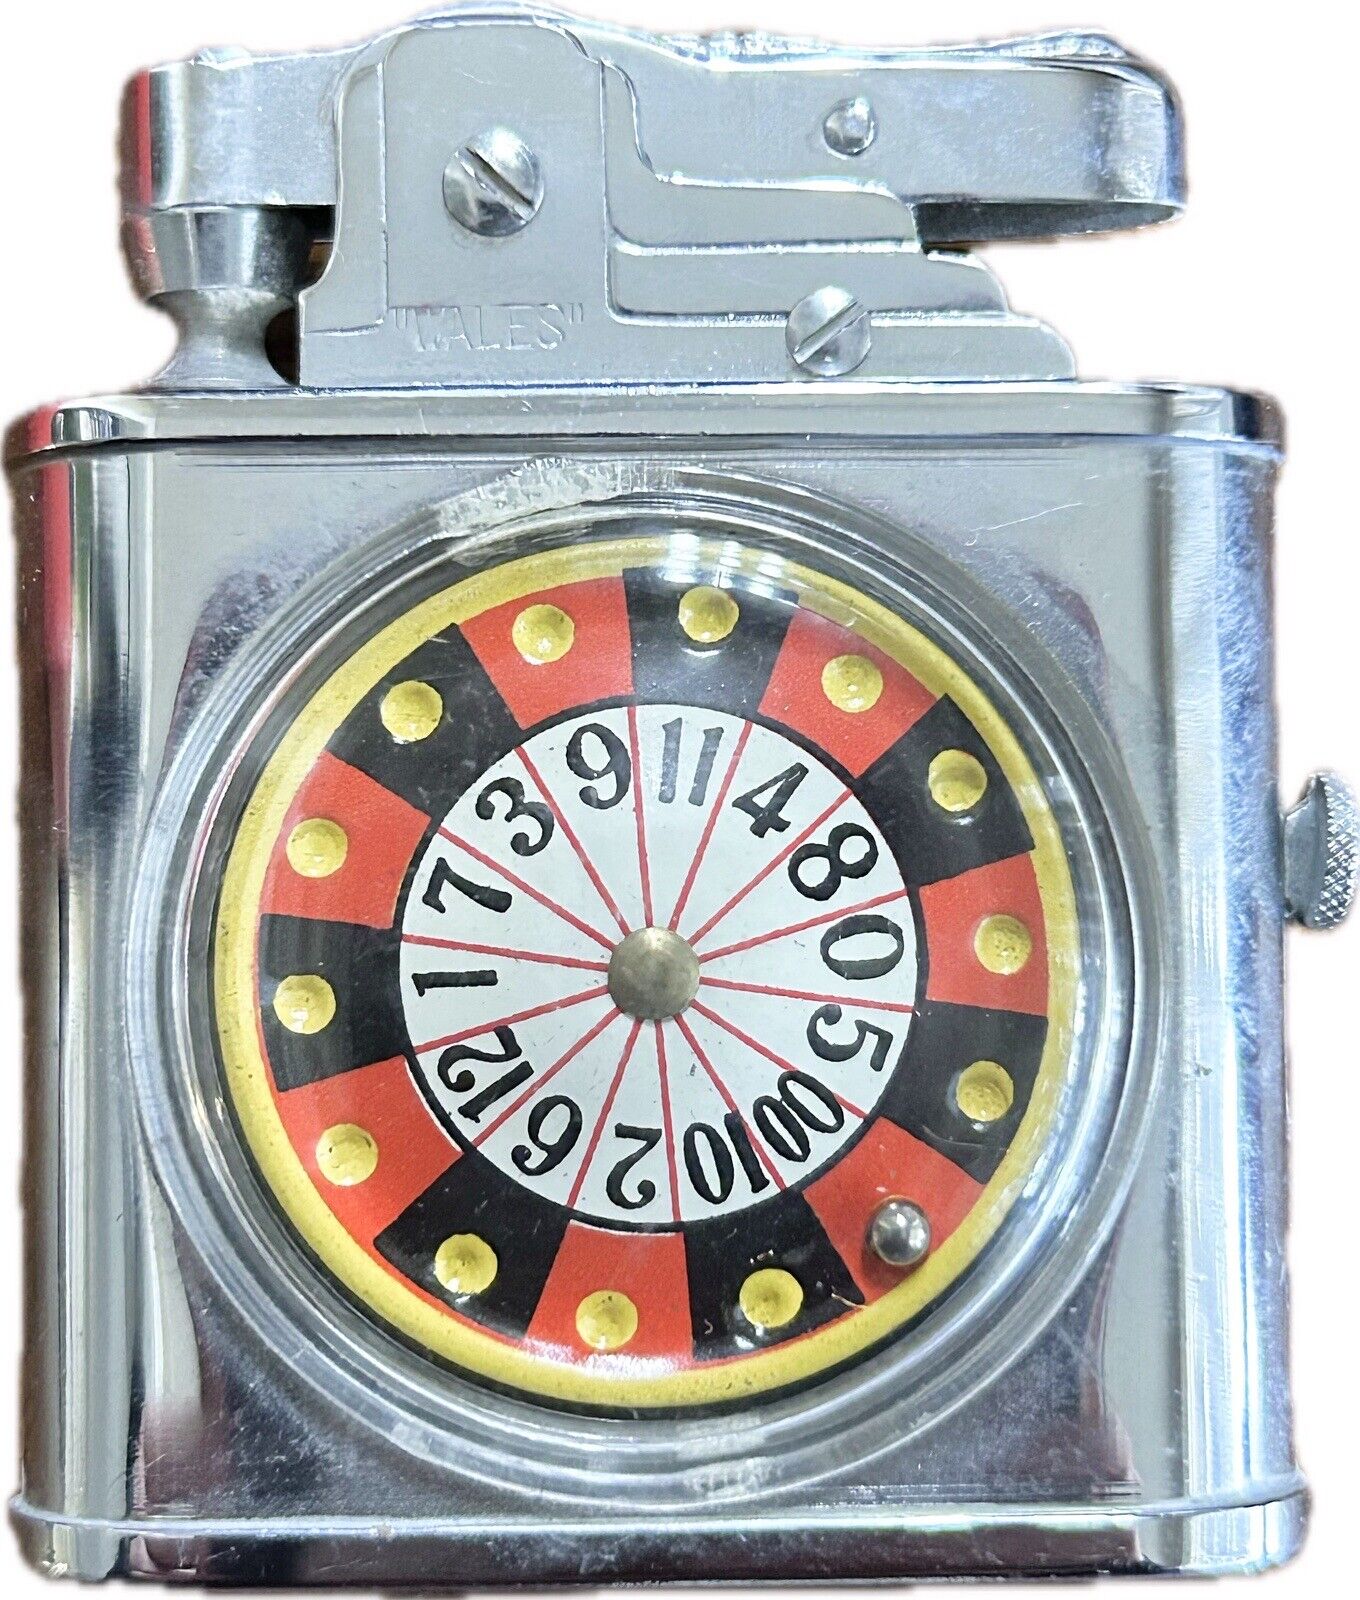 Mid-1900s “Wales” Monte Carlo Antique Roulette Cigarette Lighter VG+ NOS Classy